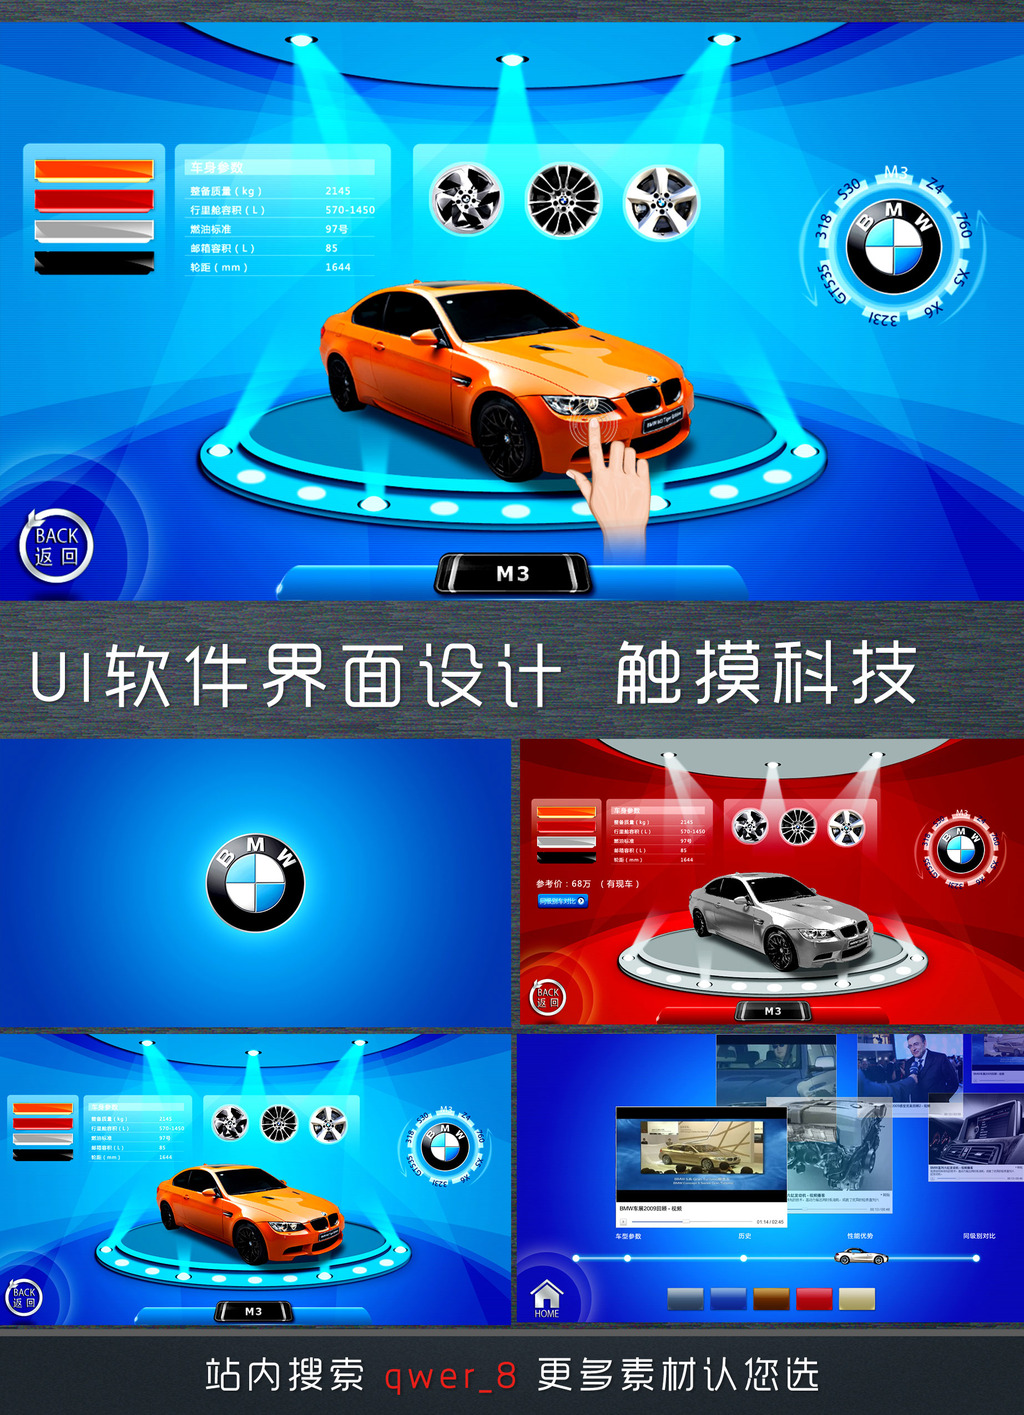 A4店汽车销售应用软件UI界面模板下载(图片编